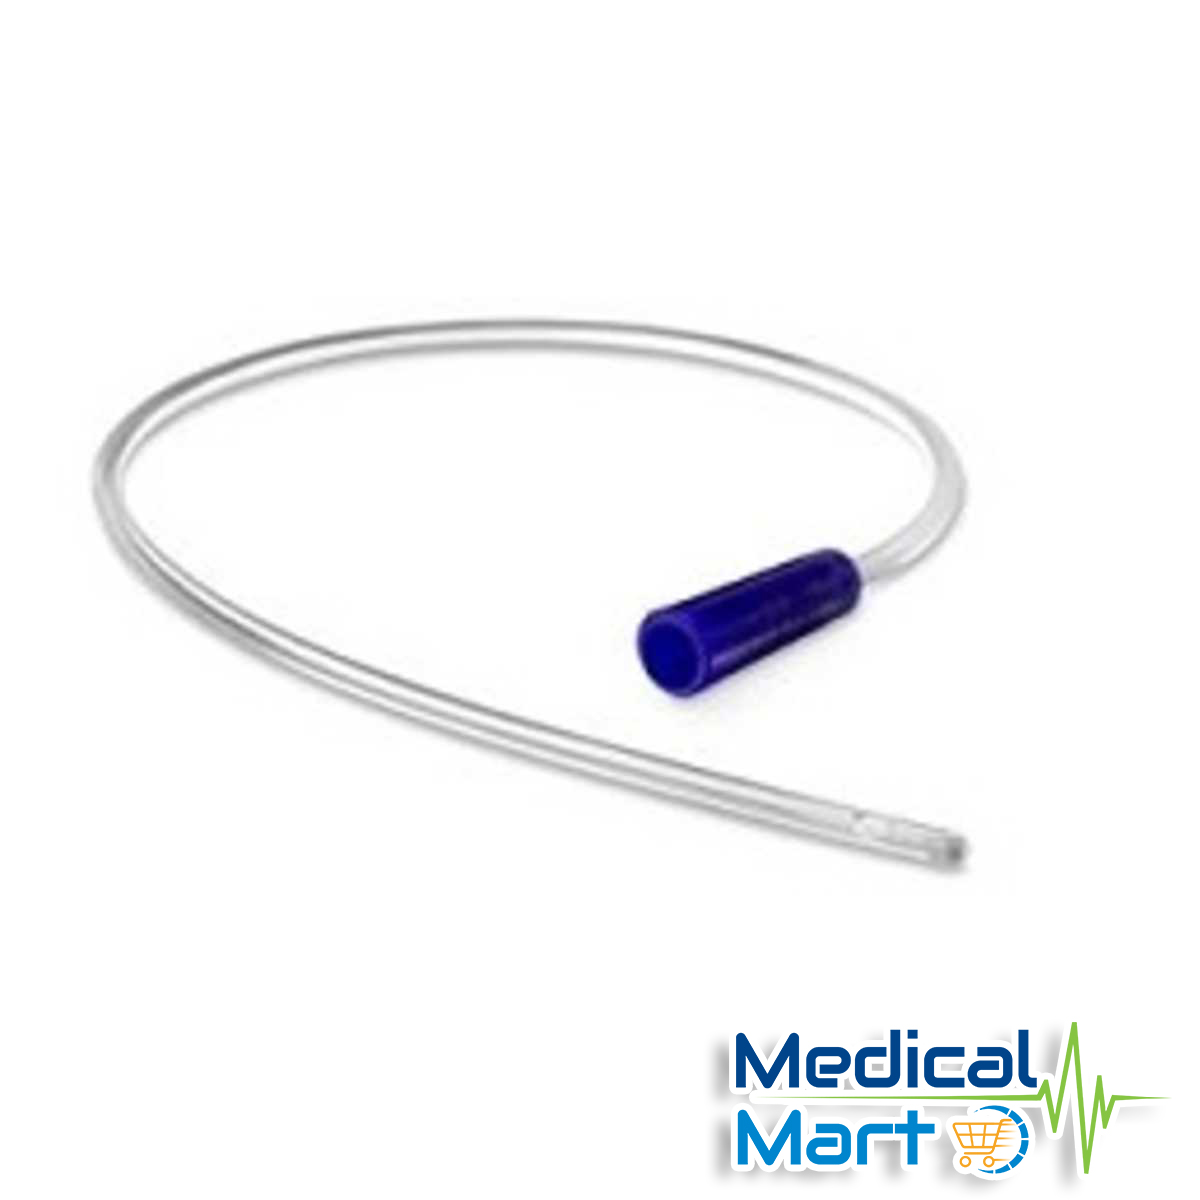 Nelaton Catheter (Purple), Fr22